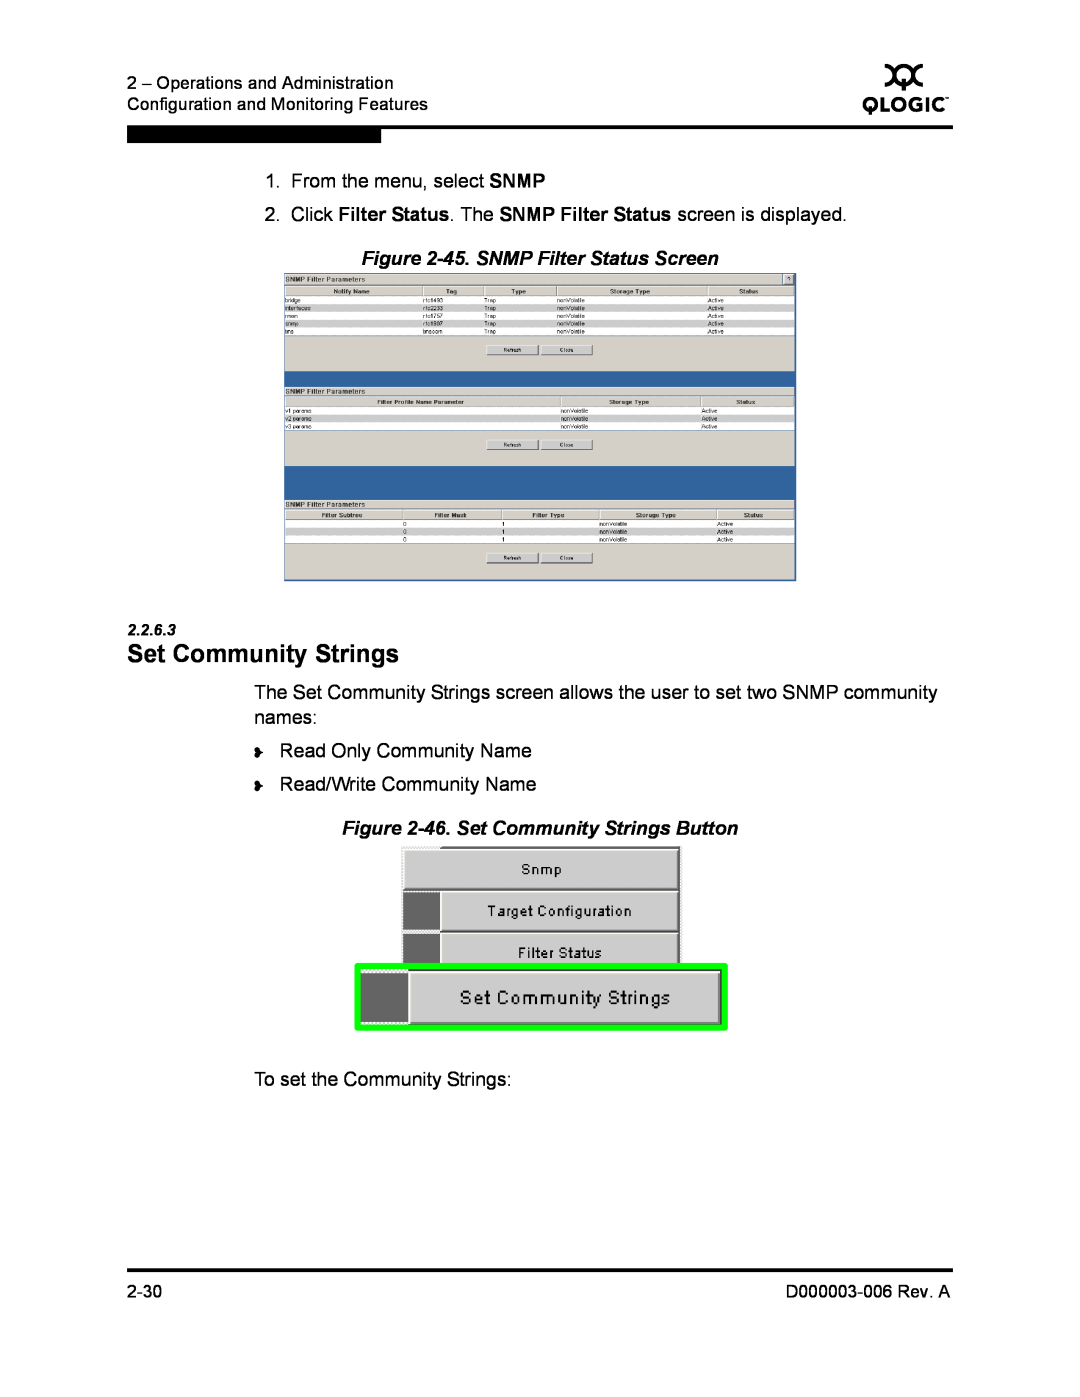 Q-Logic 9000 manual 45. SNMP Filter Status Screen, 46. Set Community Strings Button 